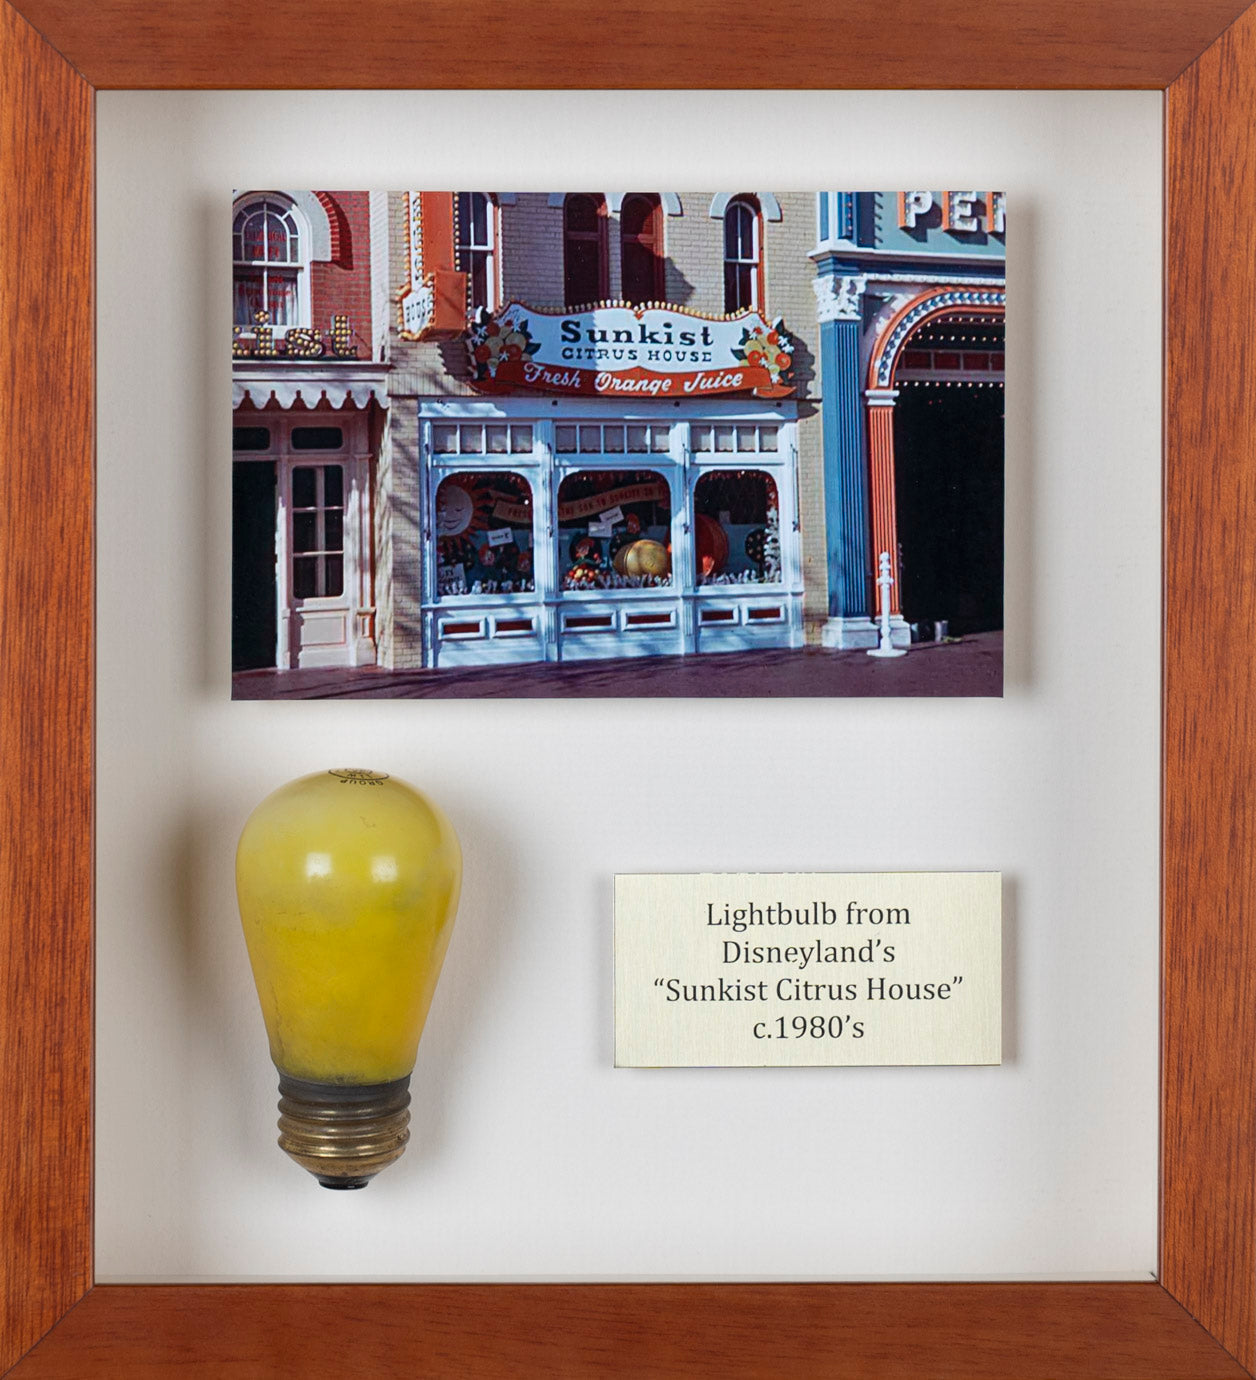 Original Light Bulb from Disneyland's "Sunkist Citrus House"